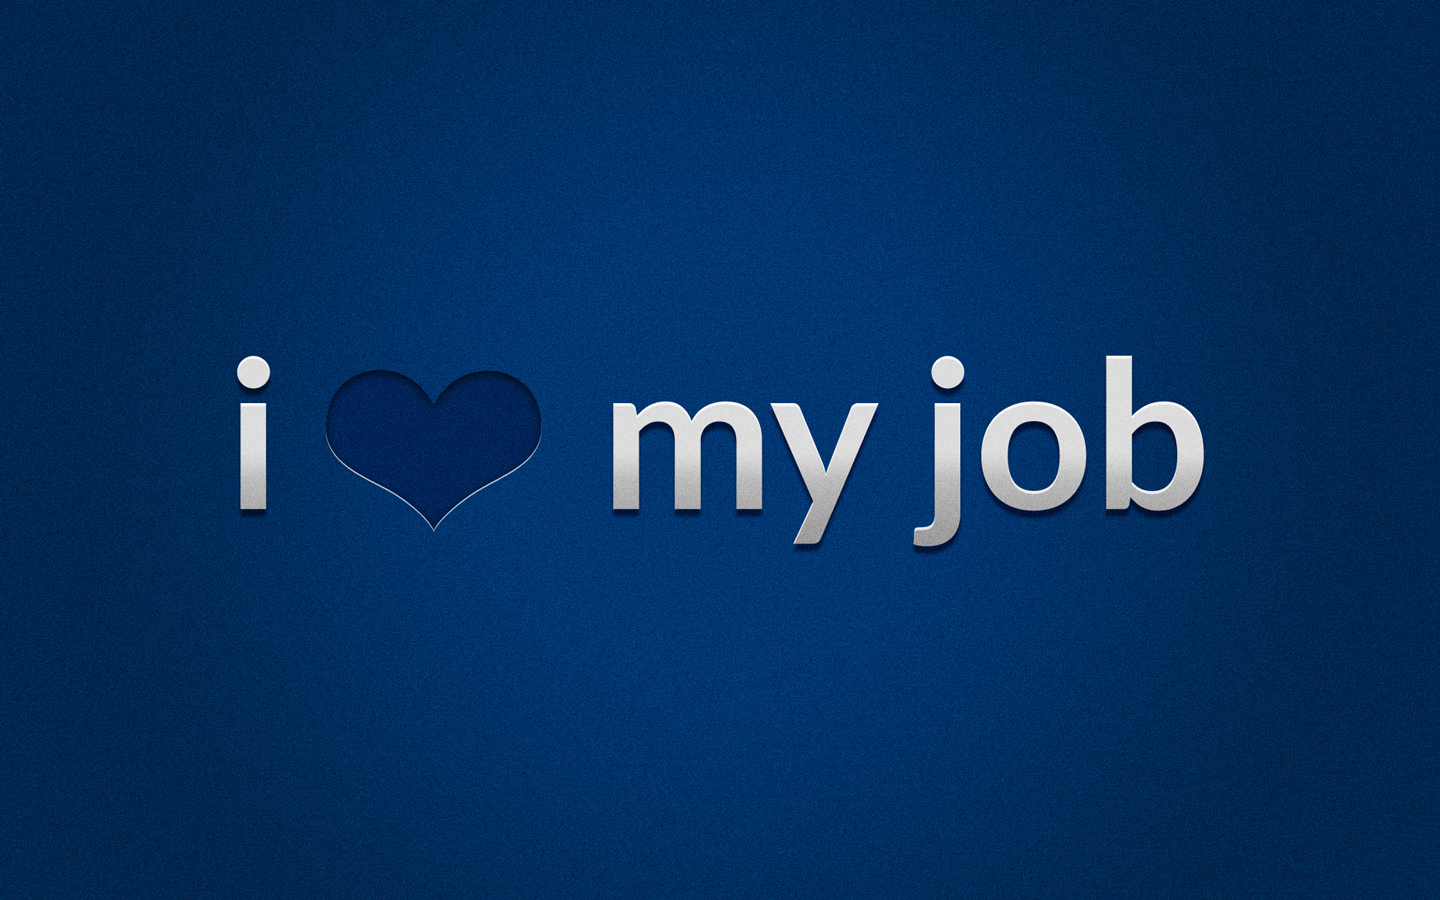 Ilovemyjob - Love My Job - HD Wallpaper 